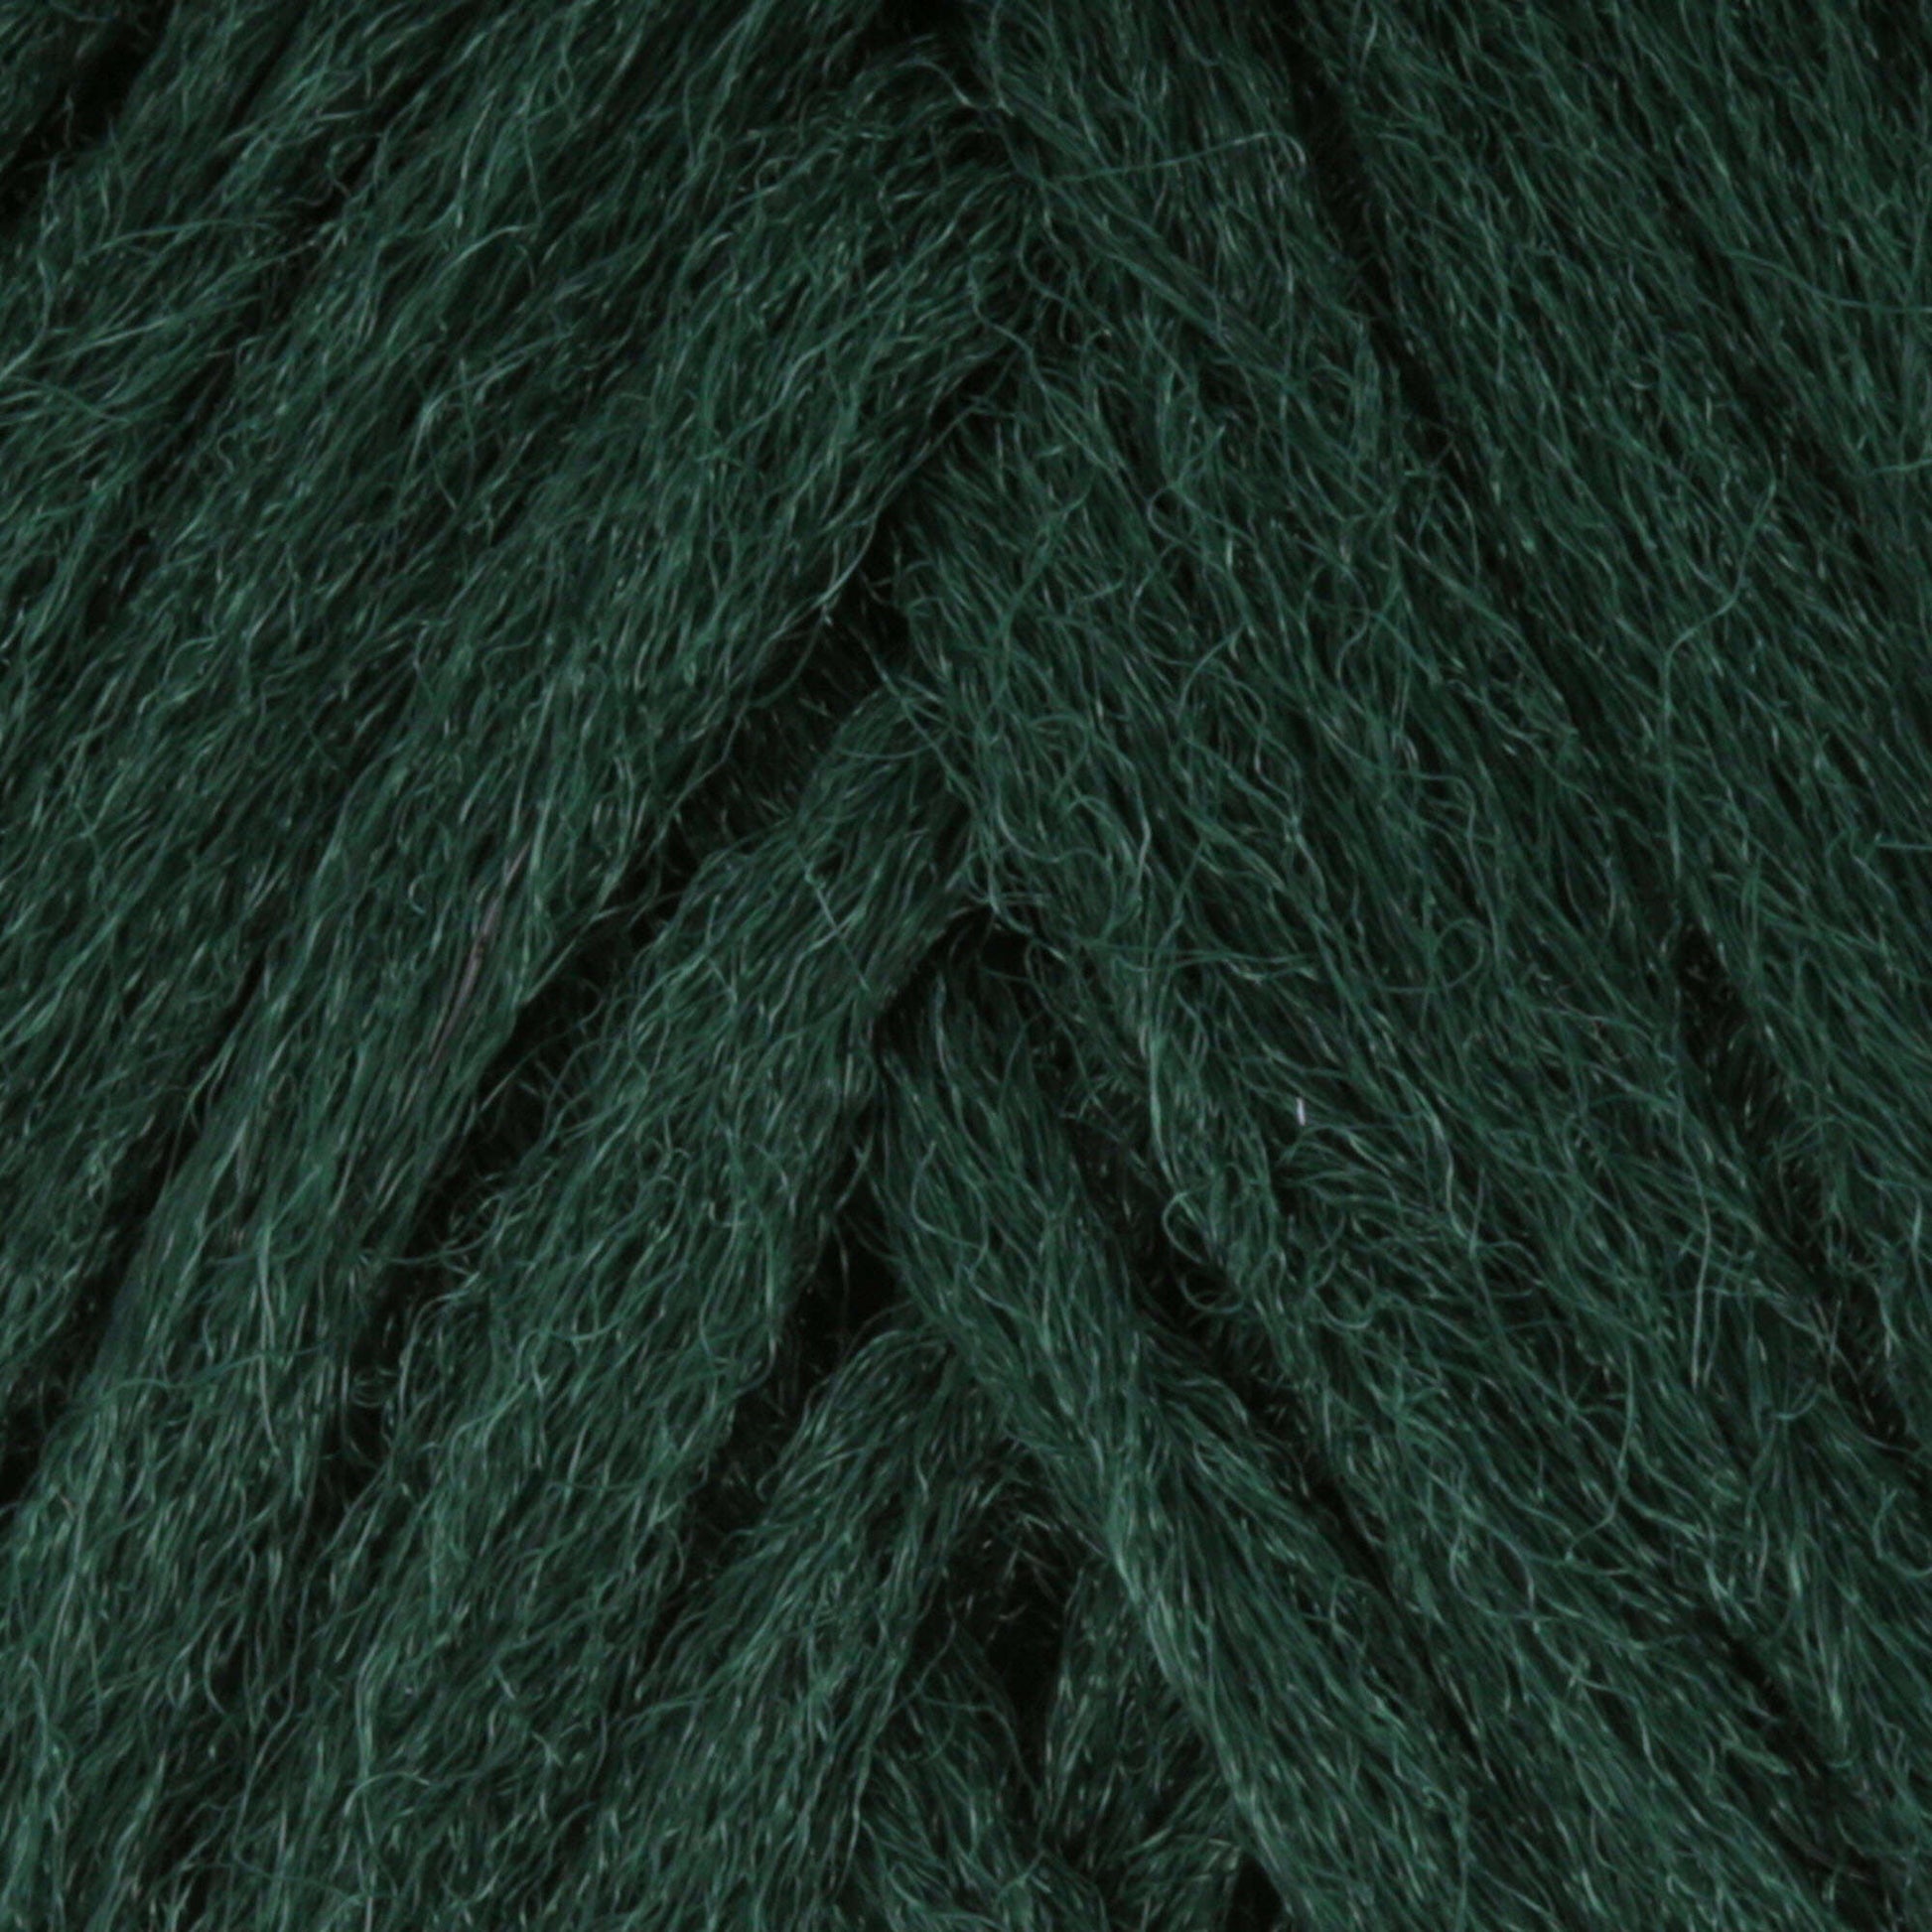 Phentex Slipper & Craft Yarn Deep Green